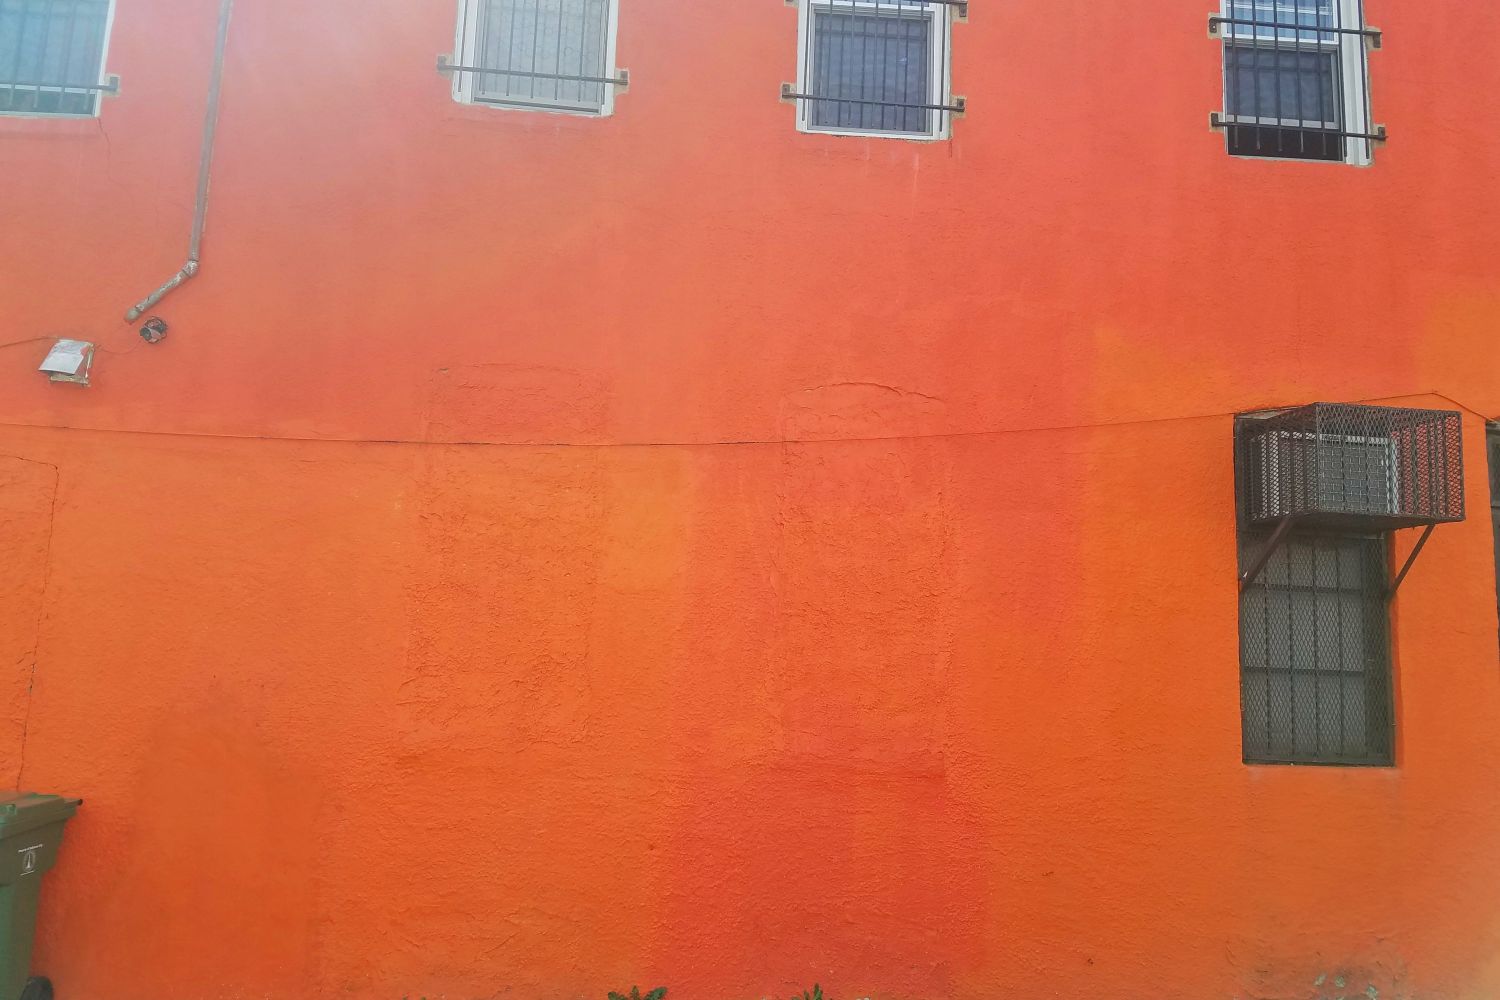 Rainbow Baltimore - Colorful Walls | Uncustomary